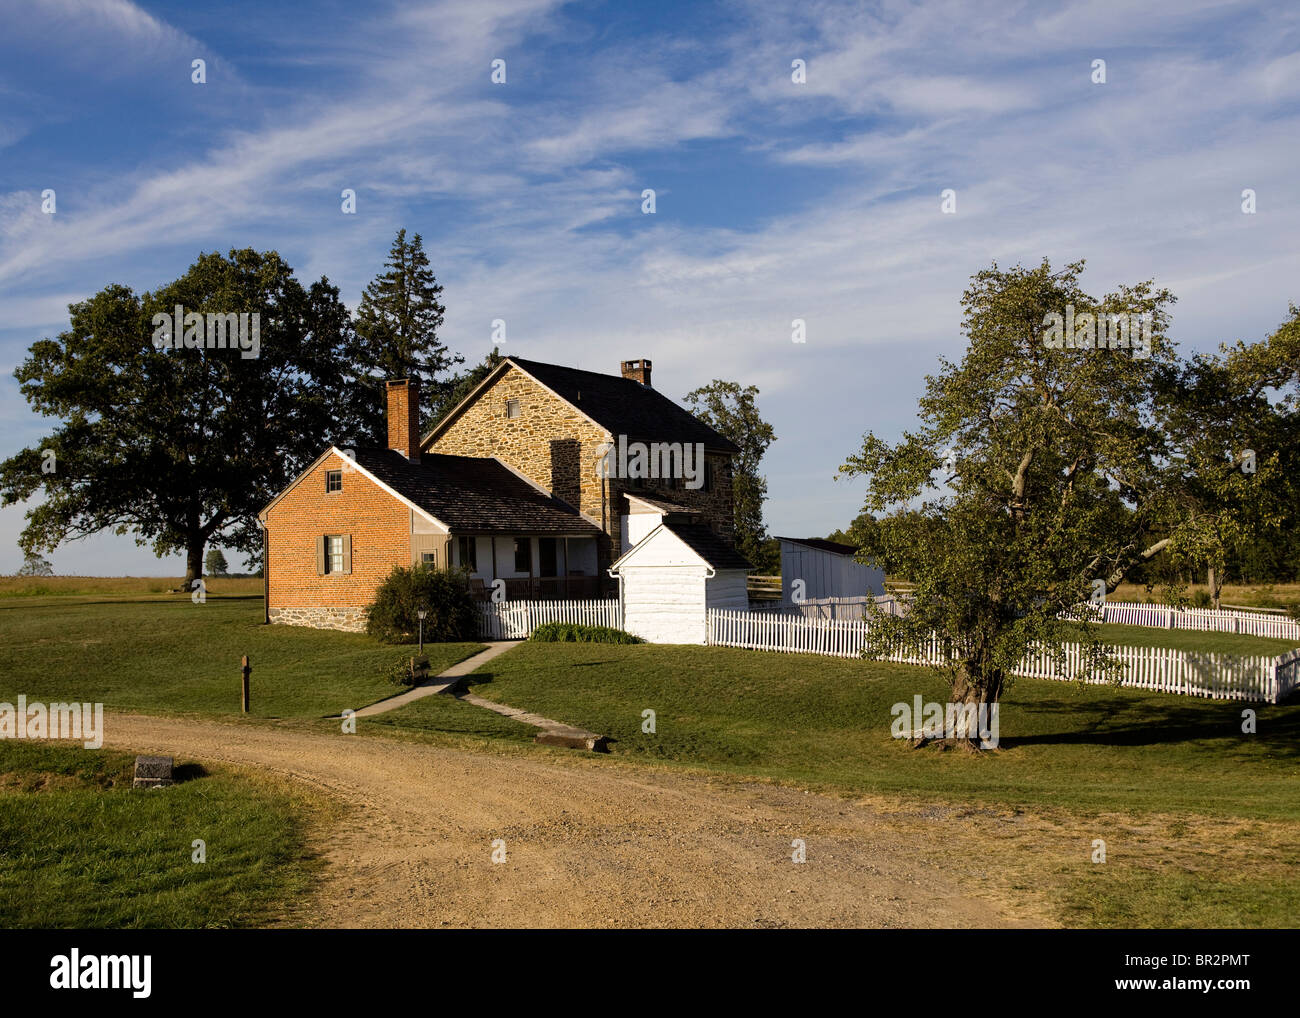 Old brick stone house with white picket fence - Virginia USA Stock Photo